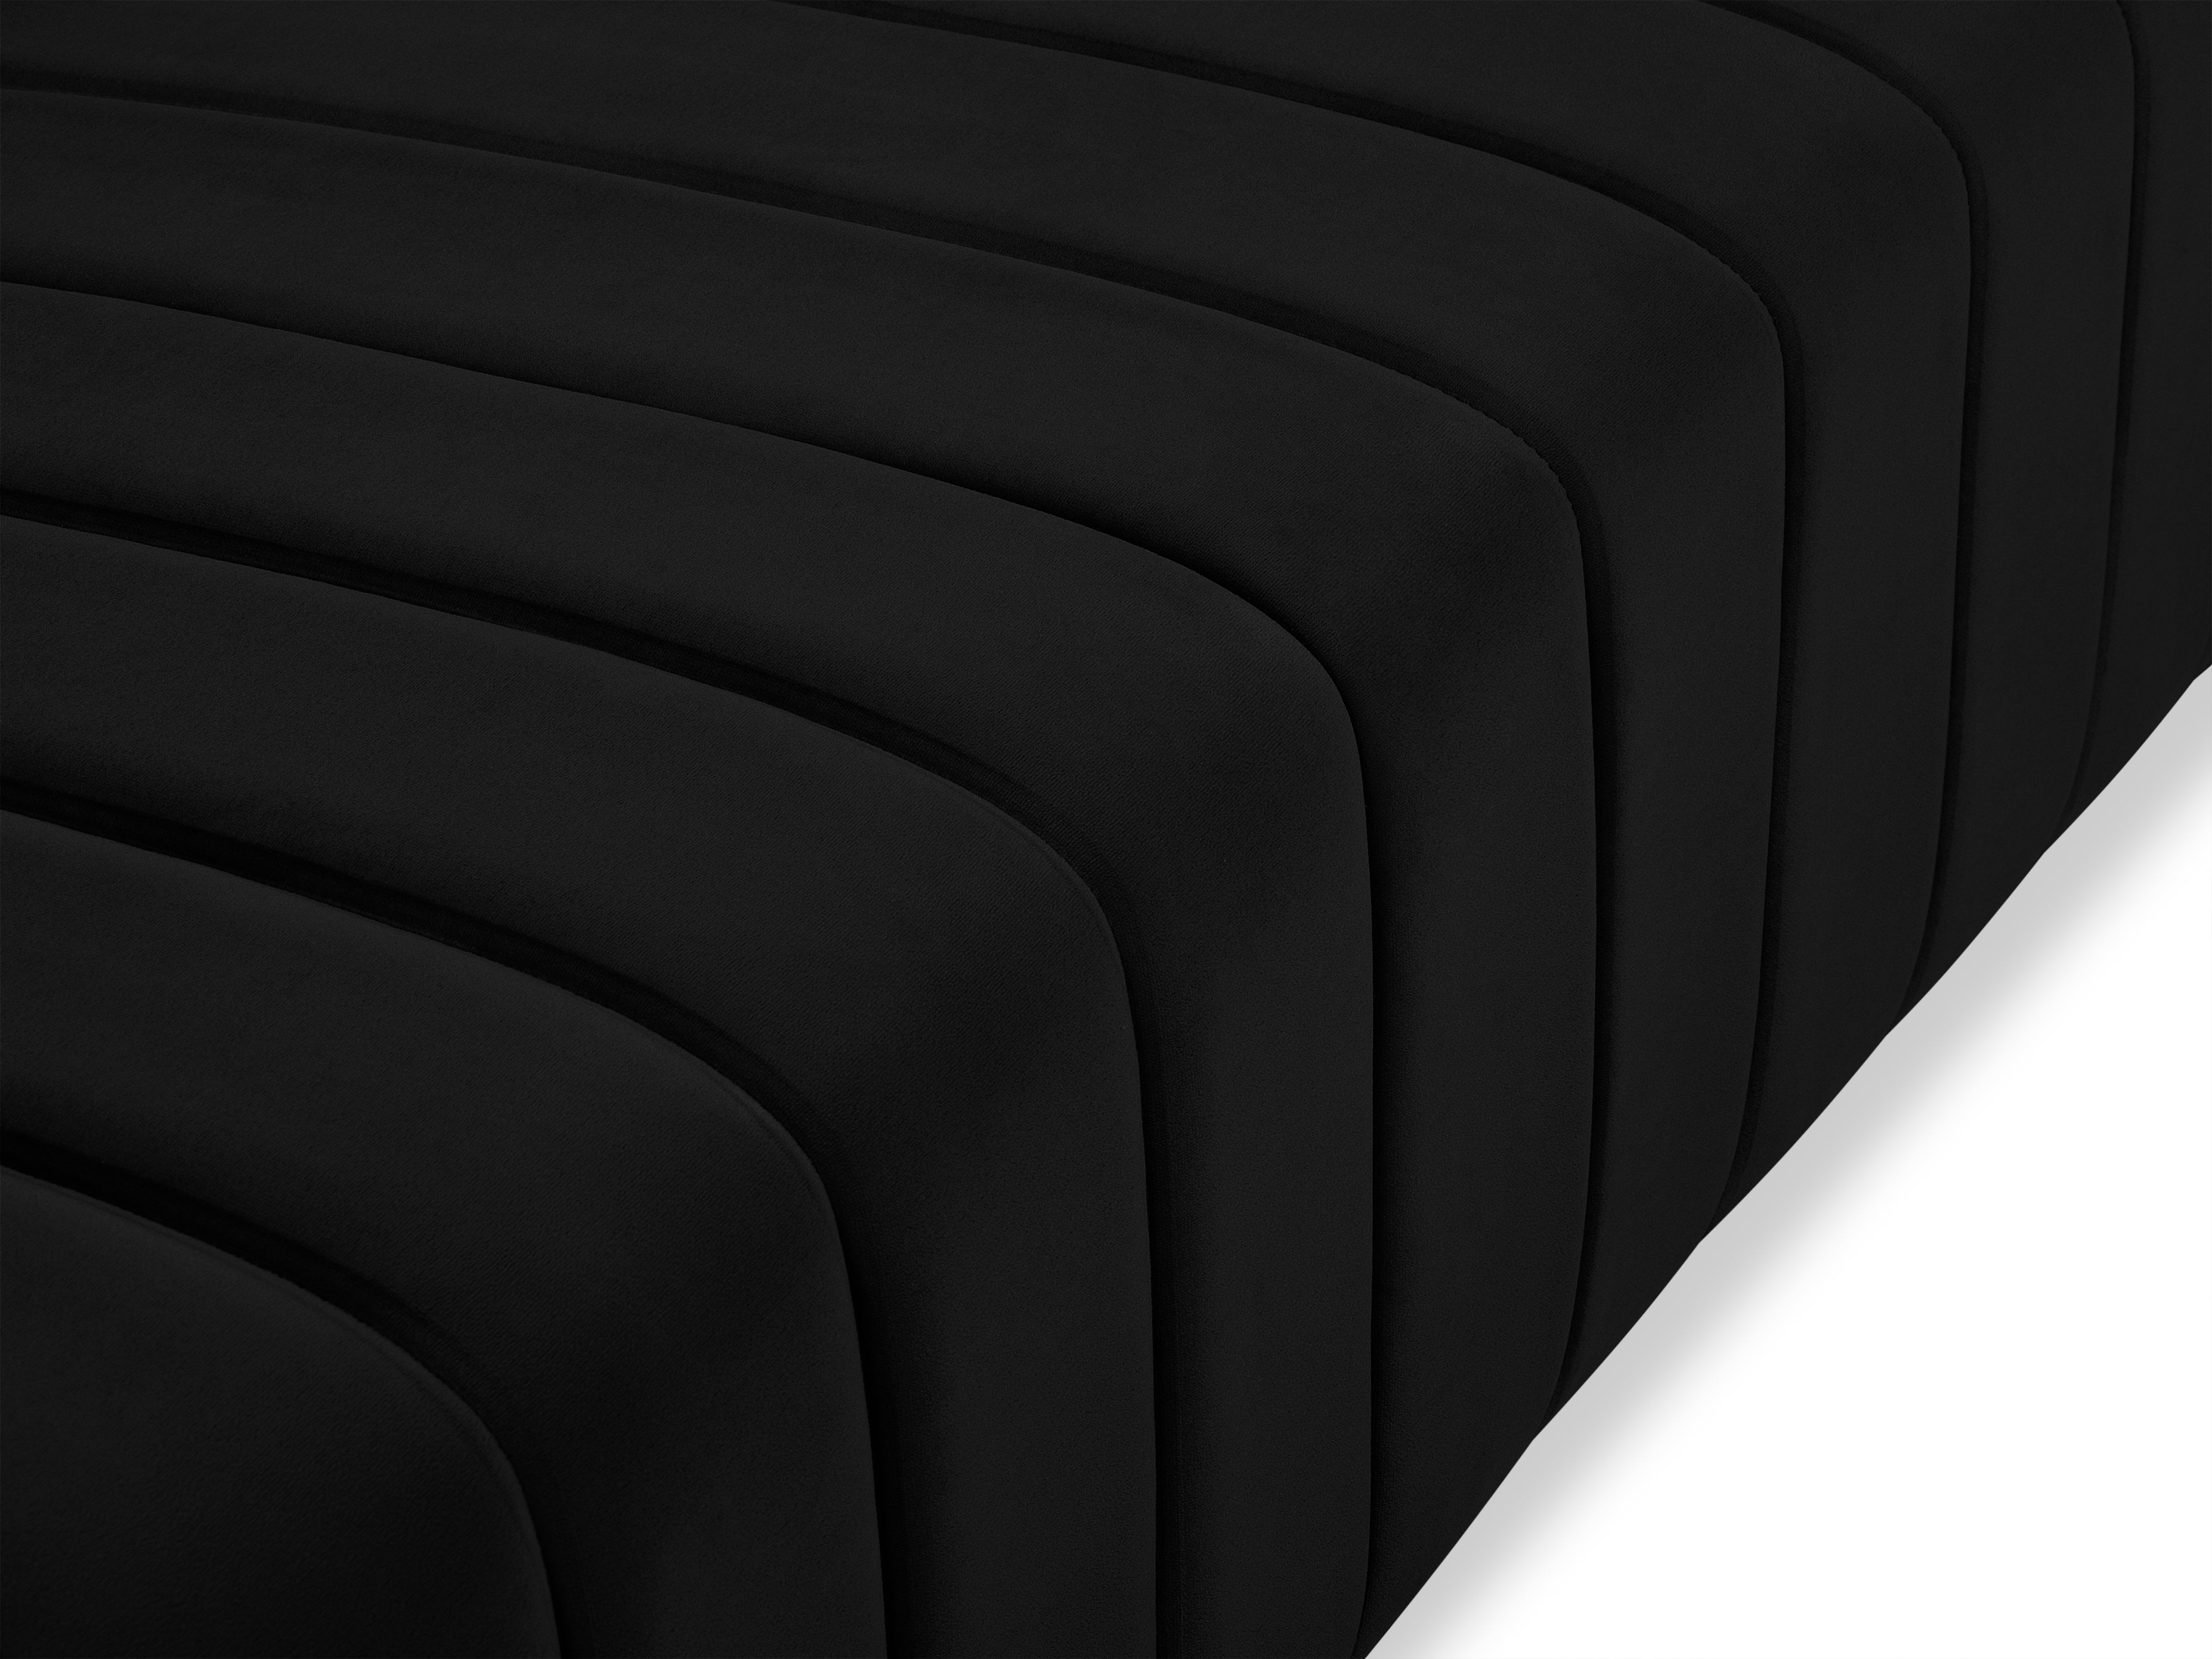 black sofa with glossy